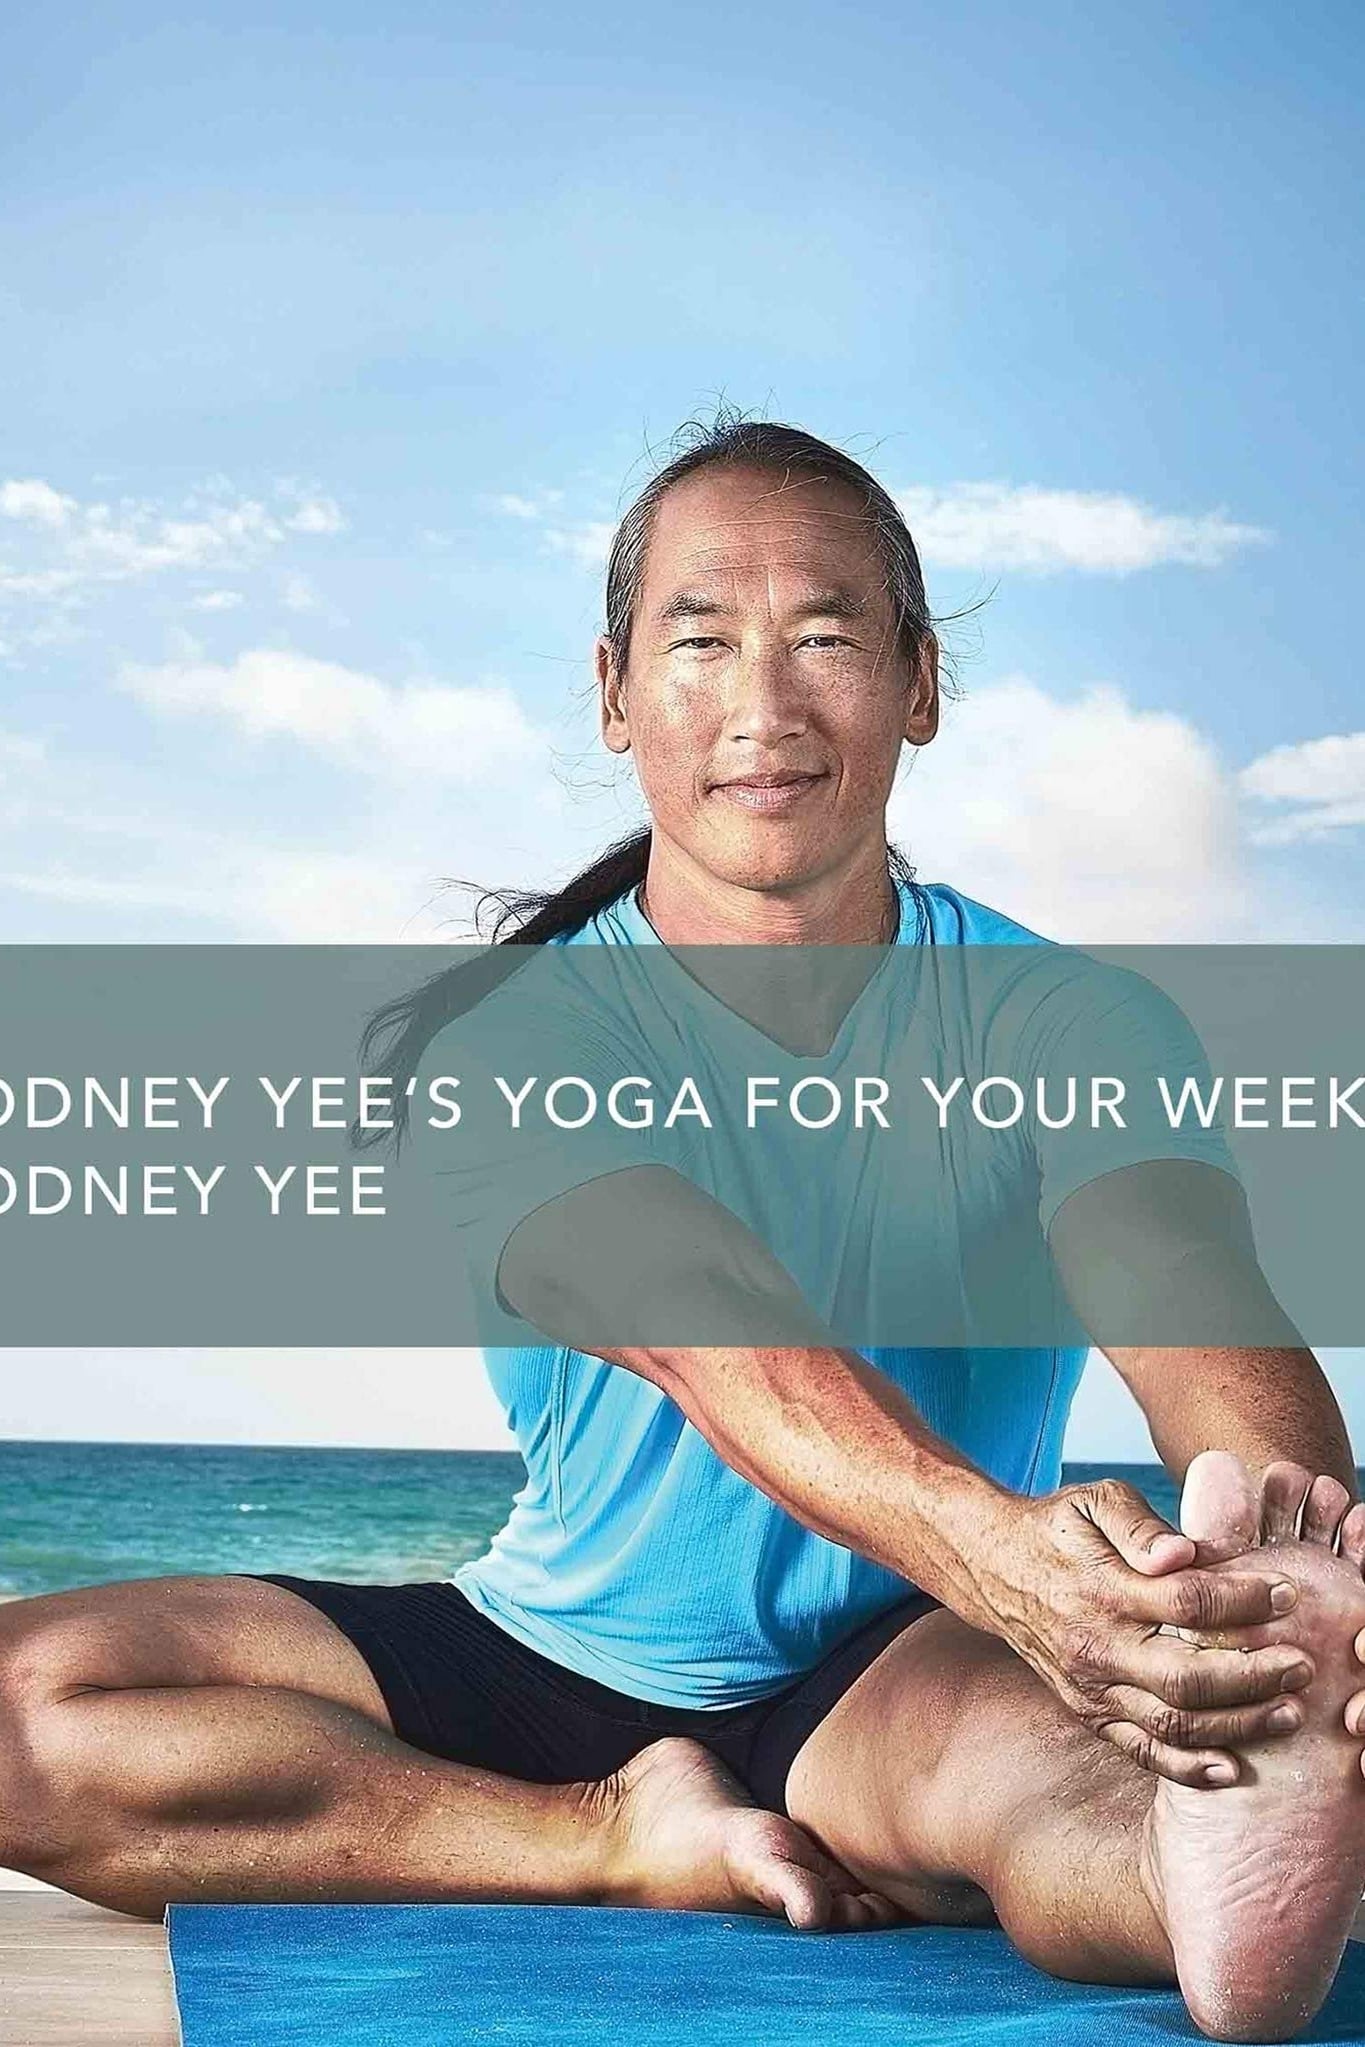 Rodney Yee's Yoga for Your Week: Flexibility